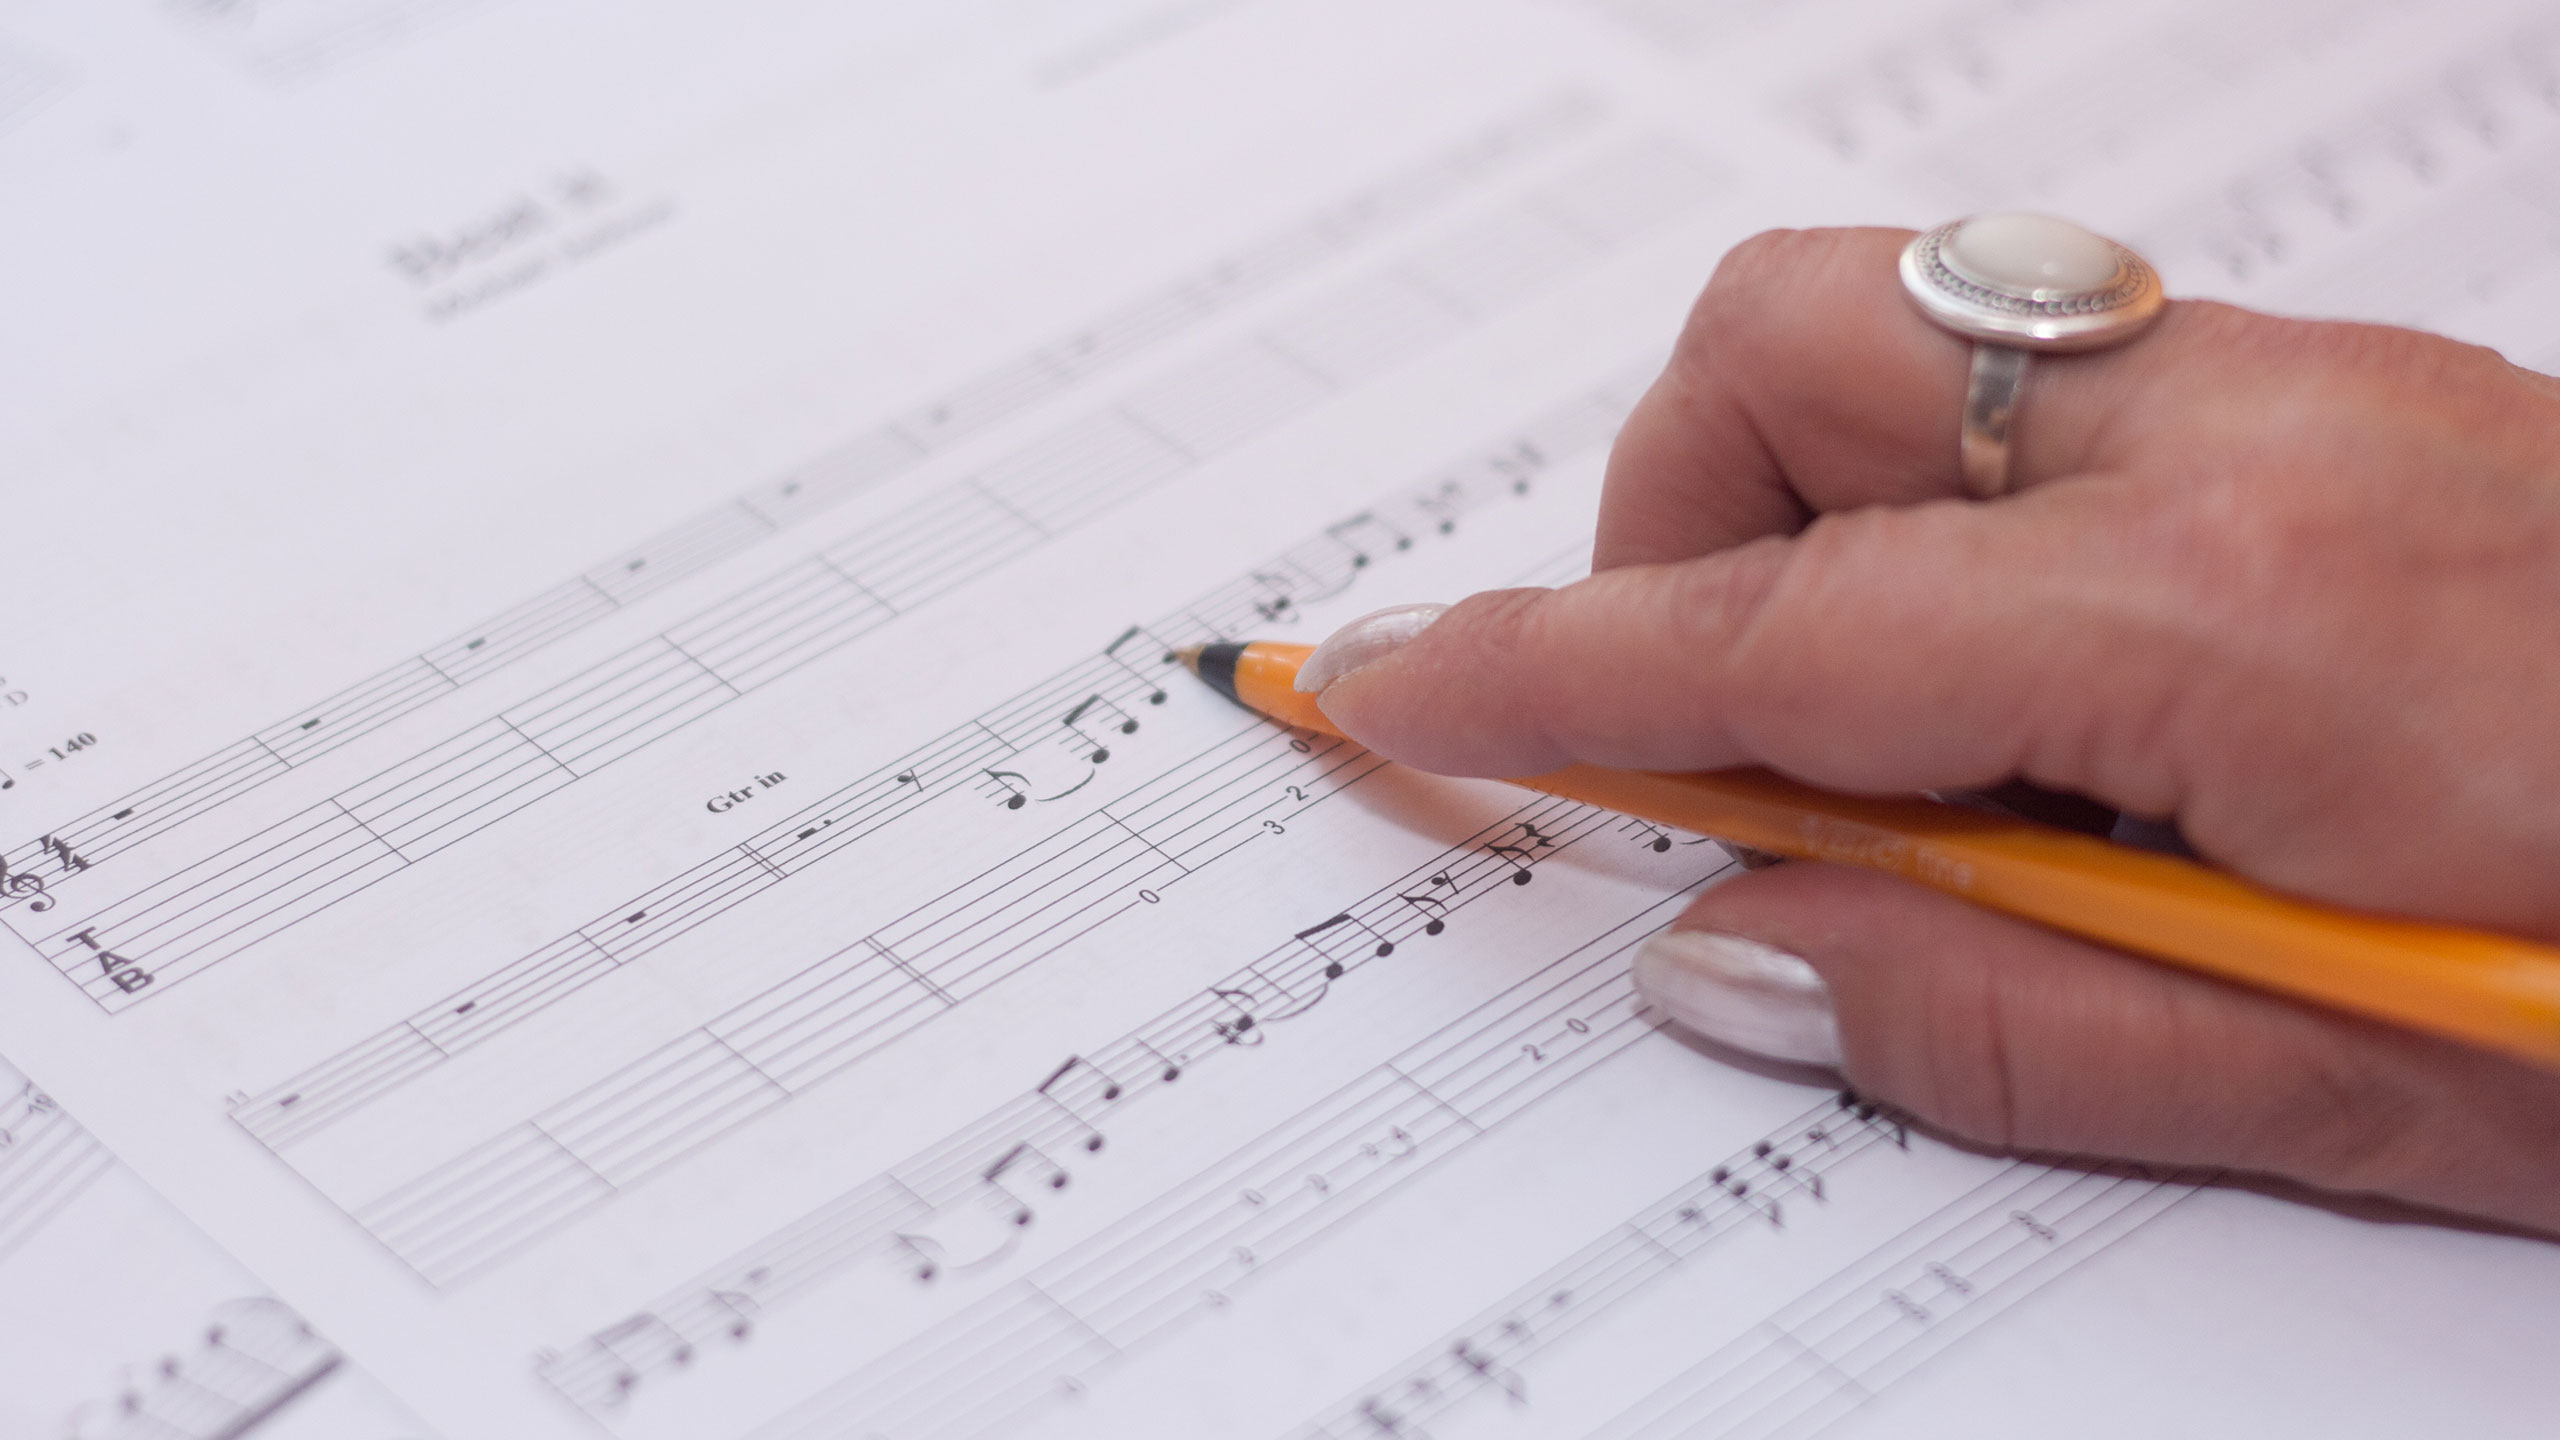  A hand writing music notation